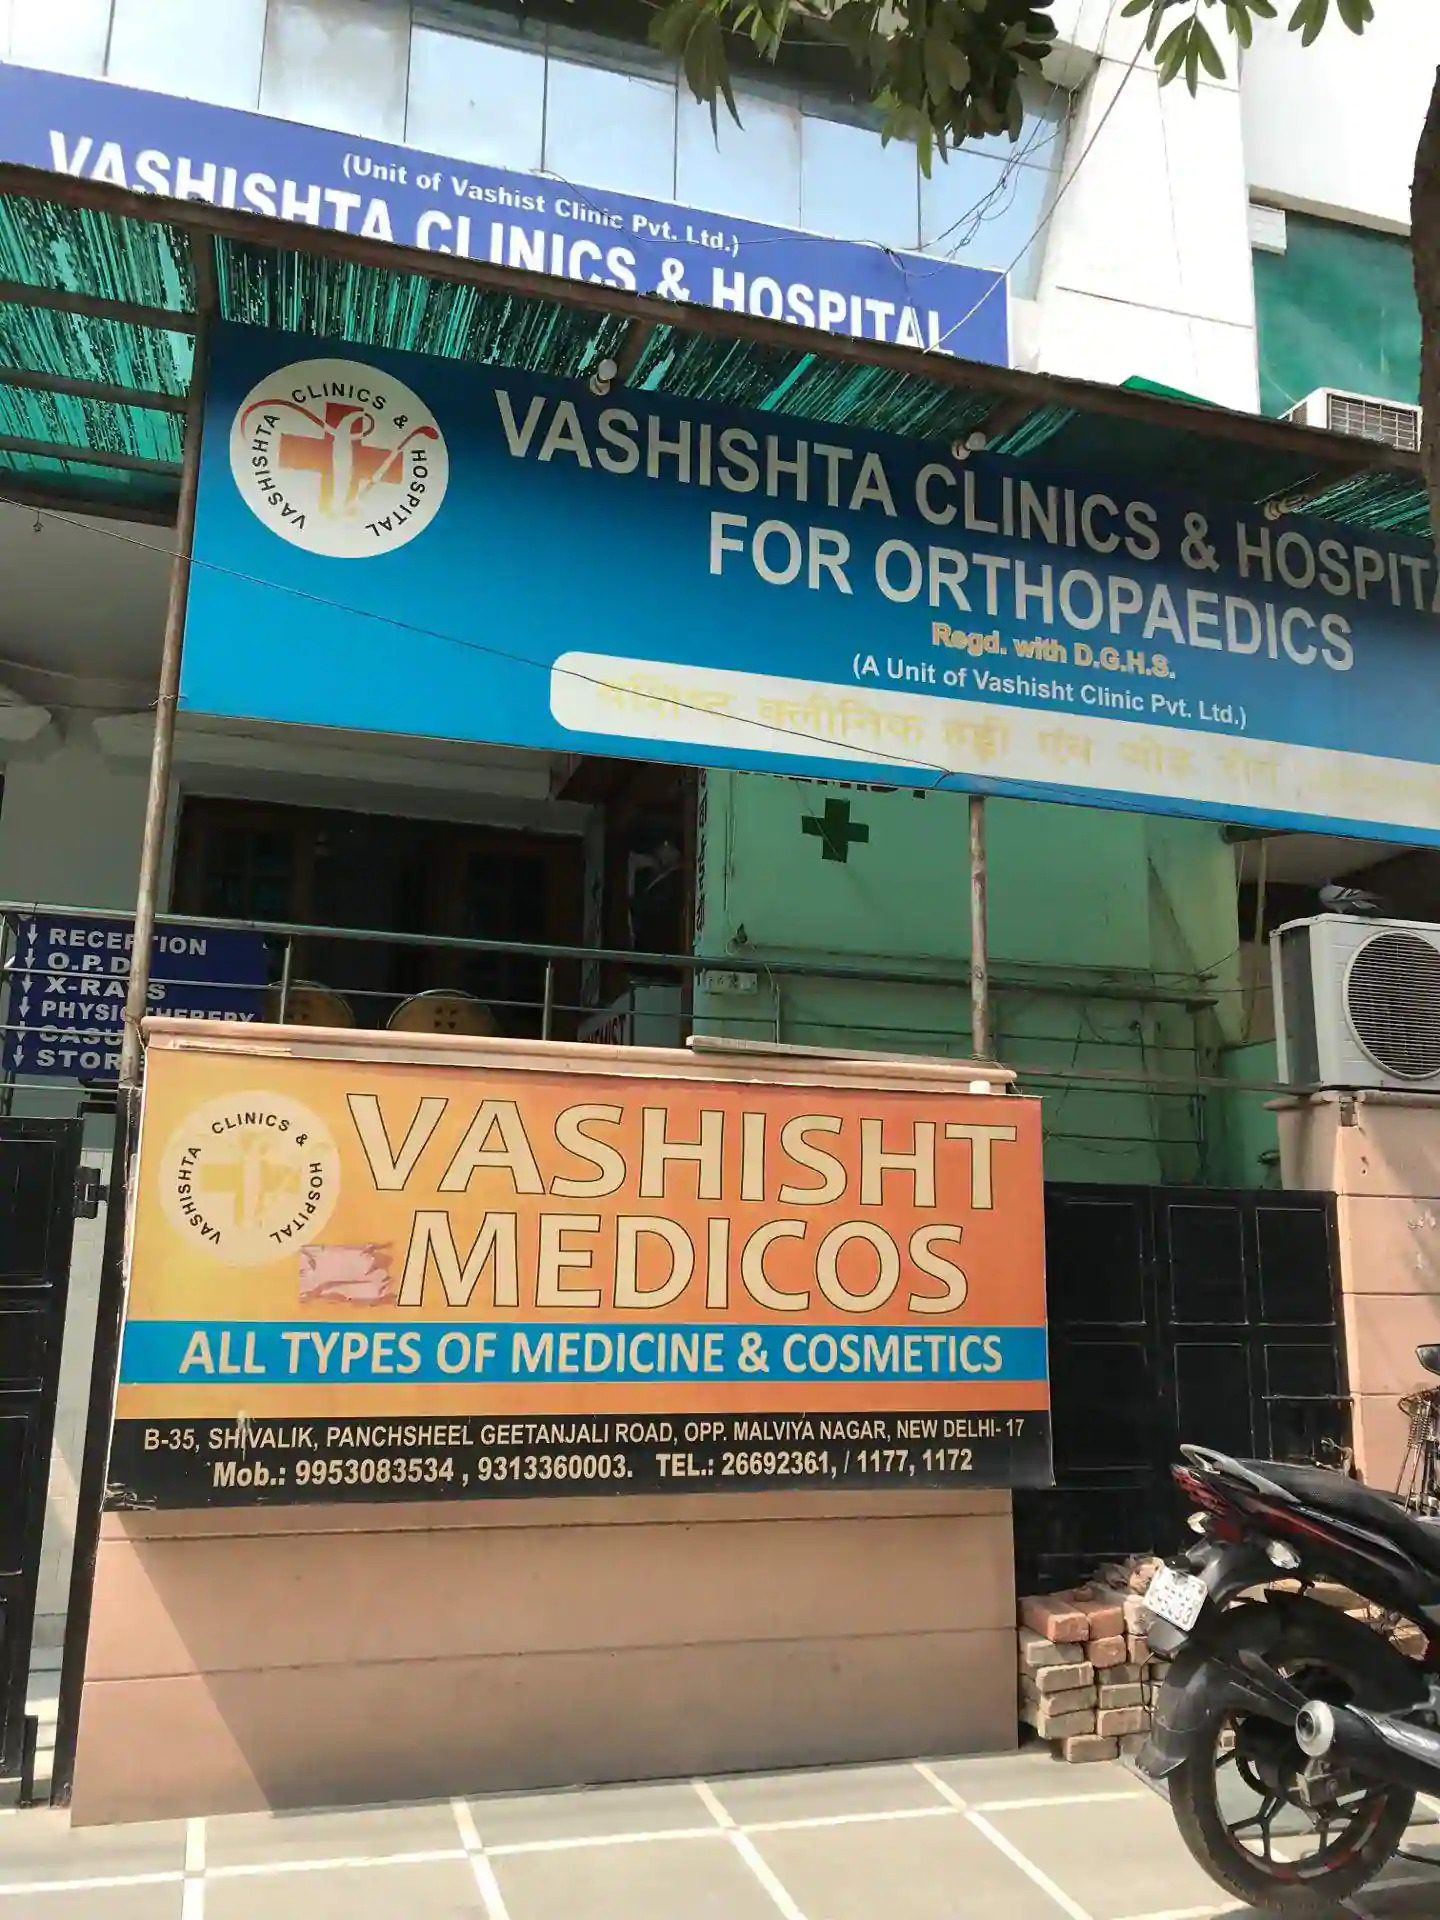 Vashishta Clinics And Hospital For Orthopaedics photo